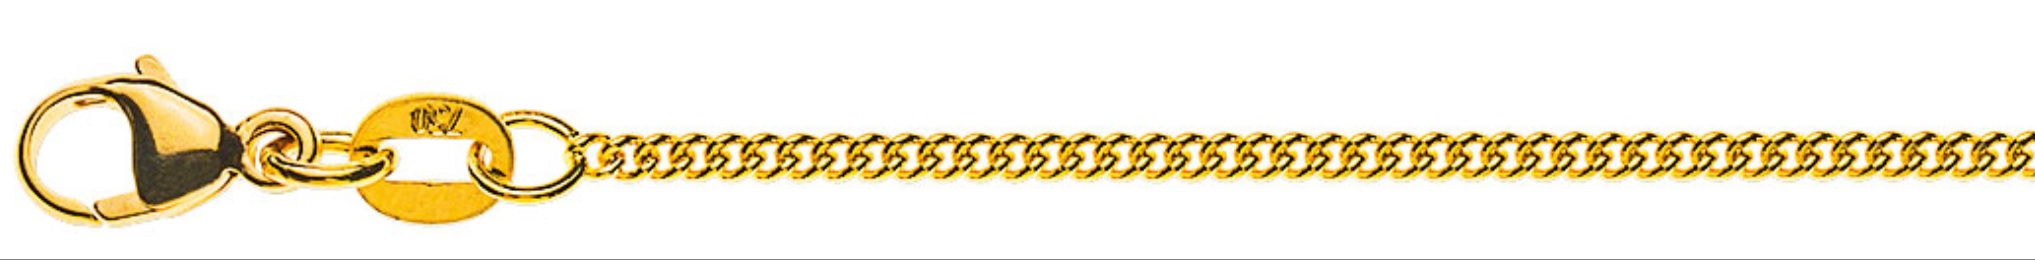 AURONOS Prestige Necklace yellow gold 18K round curb chain 42cm 1.6mm